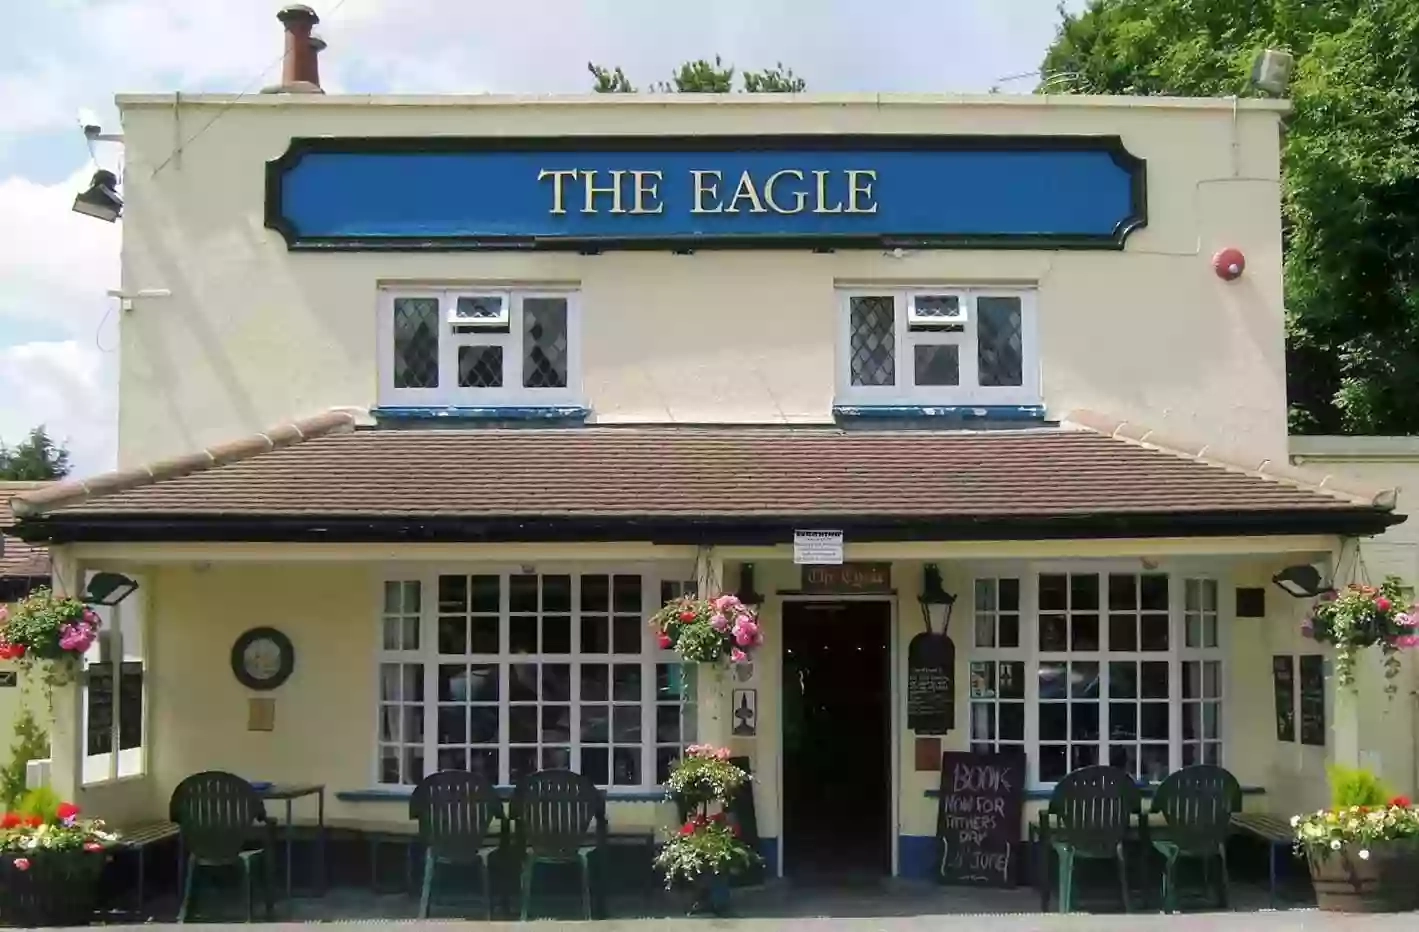 The Eagle at Kelvedon Hatch